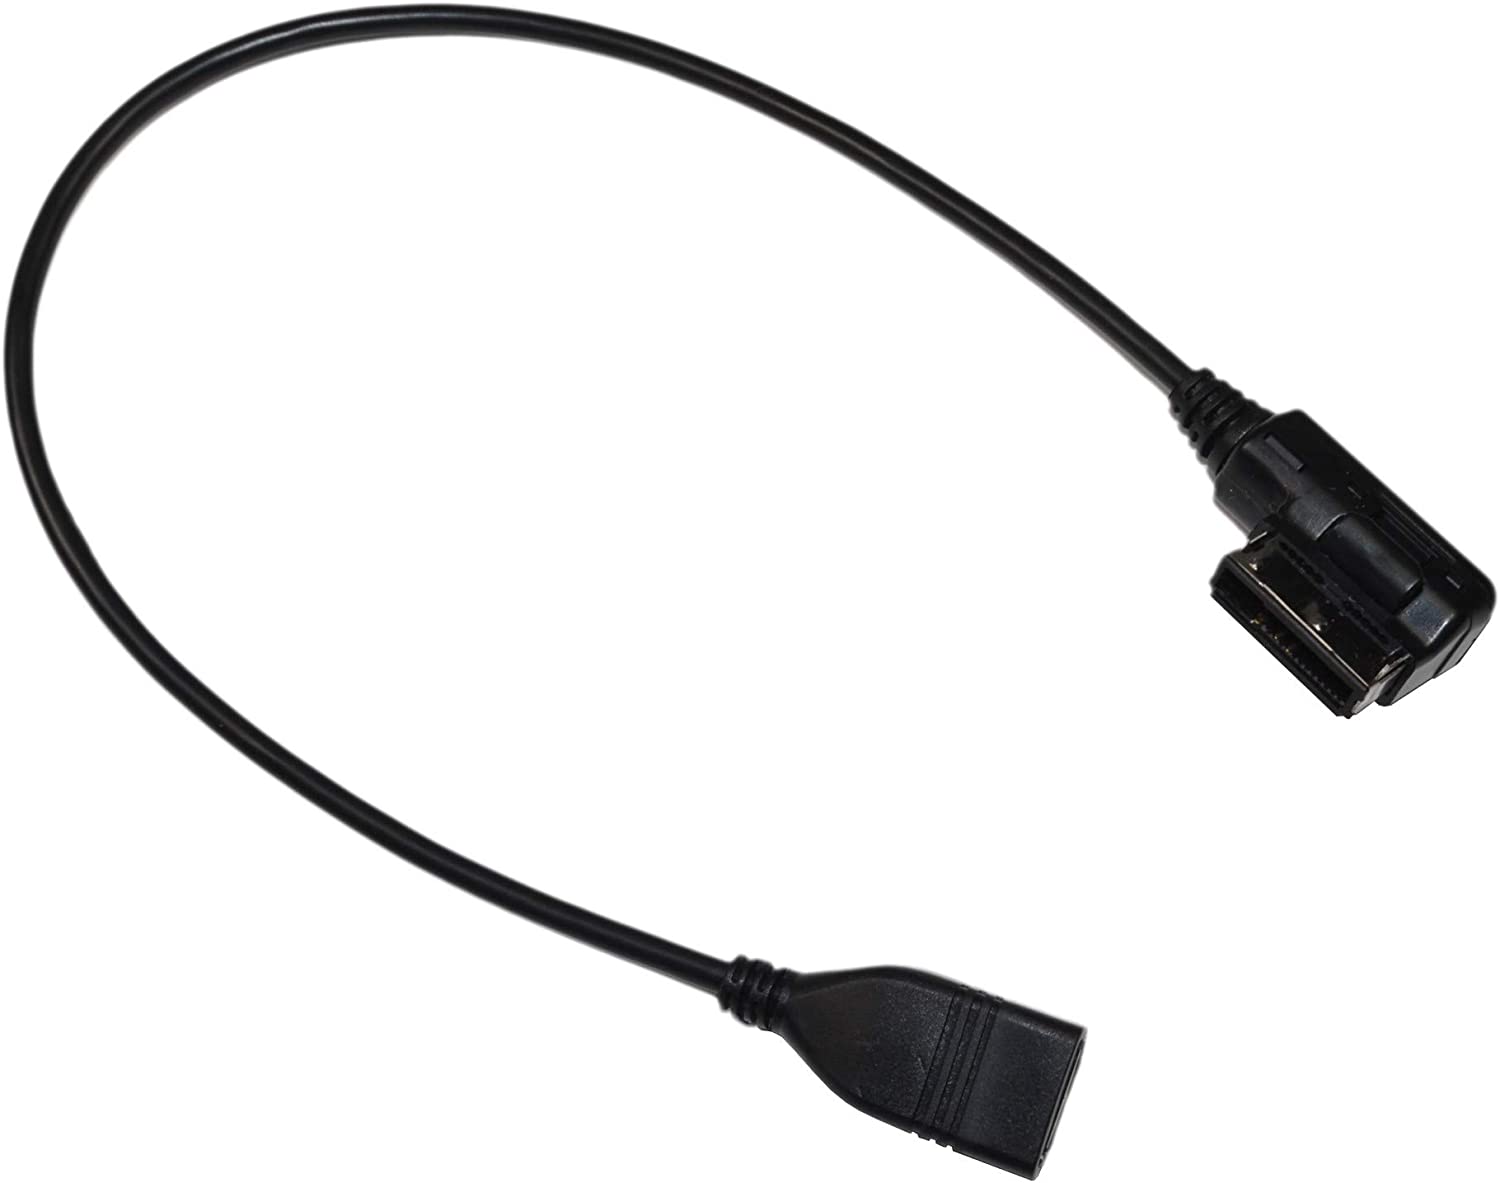 HQRP MDI MMI / USB Cable Adapter for VW Volkswagen CC 2012, Golf R MK6 / Golf Sportwagen MK6 2012 2013, Audio MP3 Music Interface Adapter - image 1 of 7